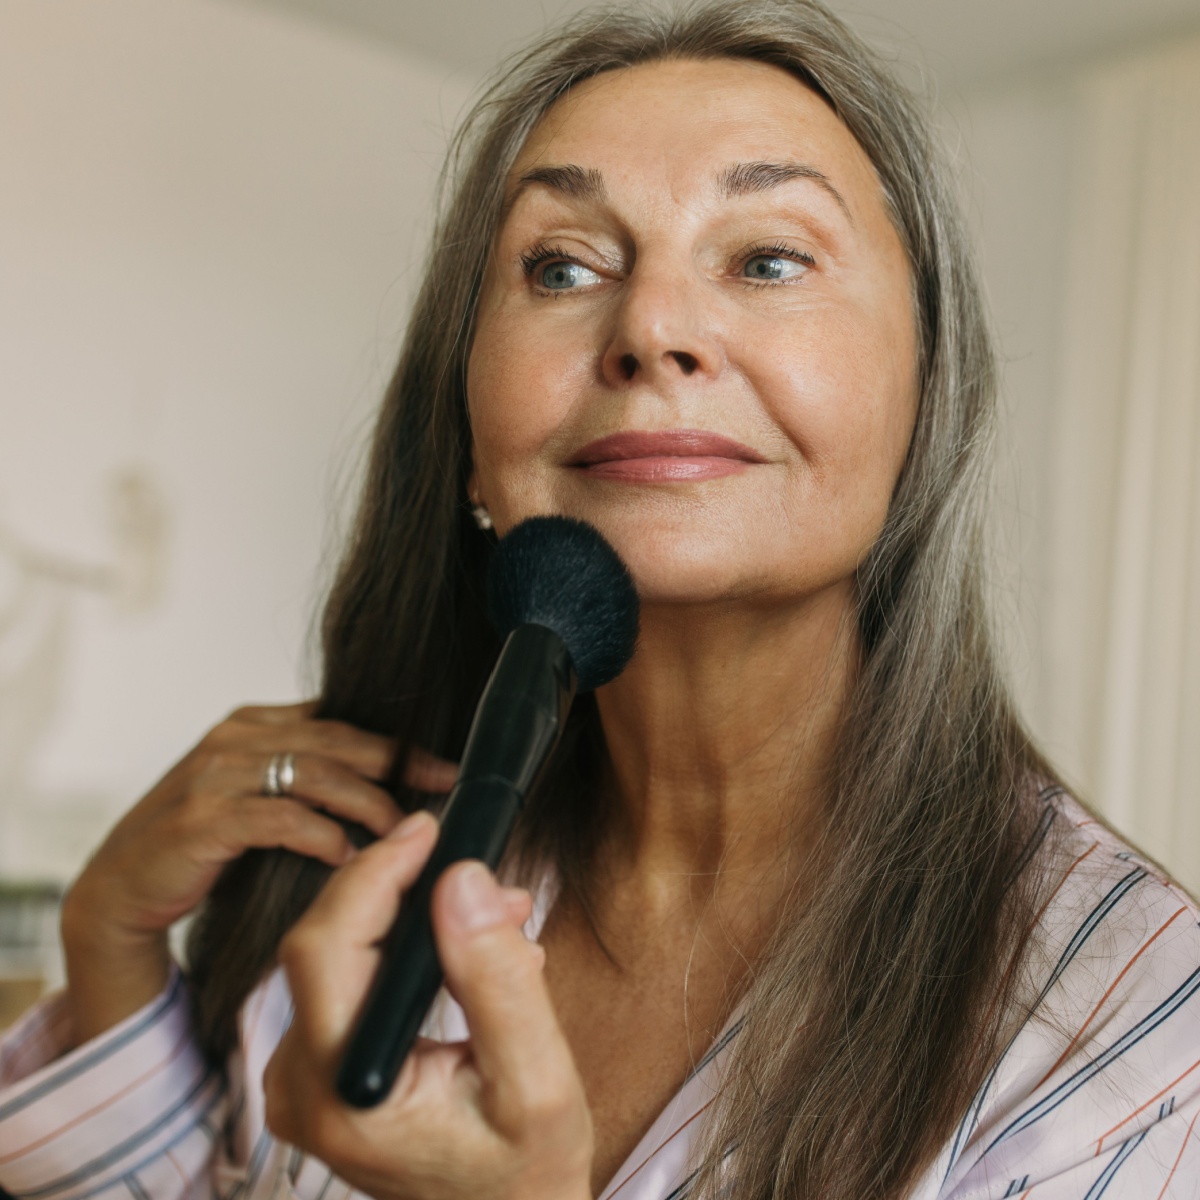 How to Prevent Wrinkles: 4 Expert Tips